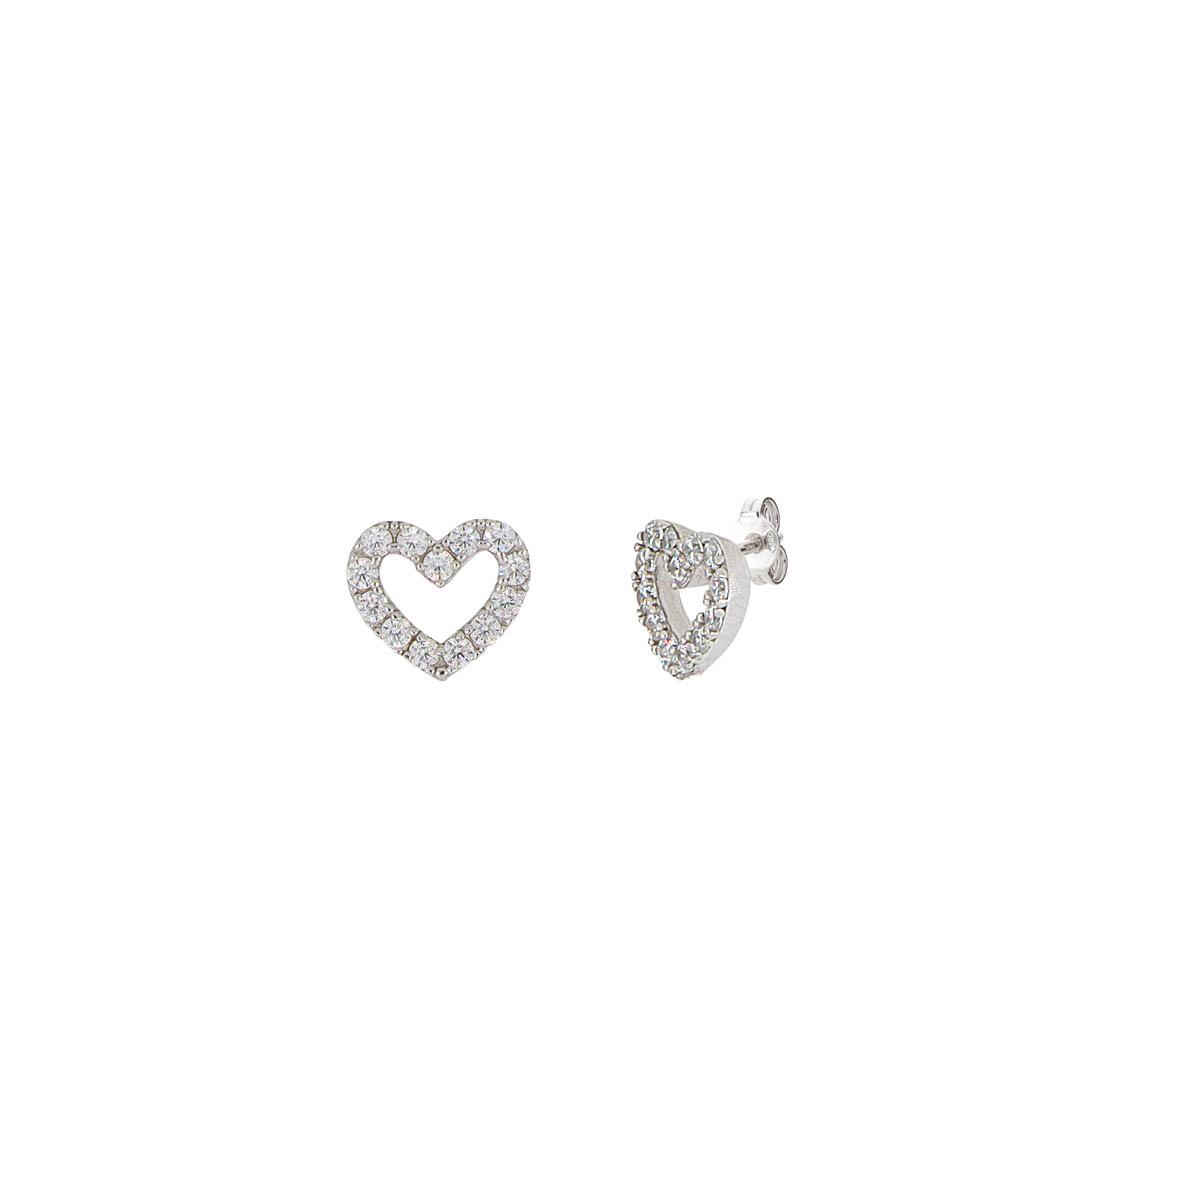 Heart earrings in 925 rhodium silver with zircons - ZOR1250-LB